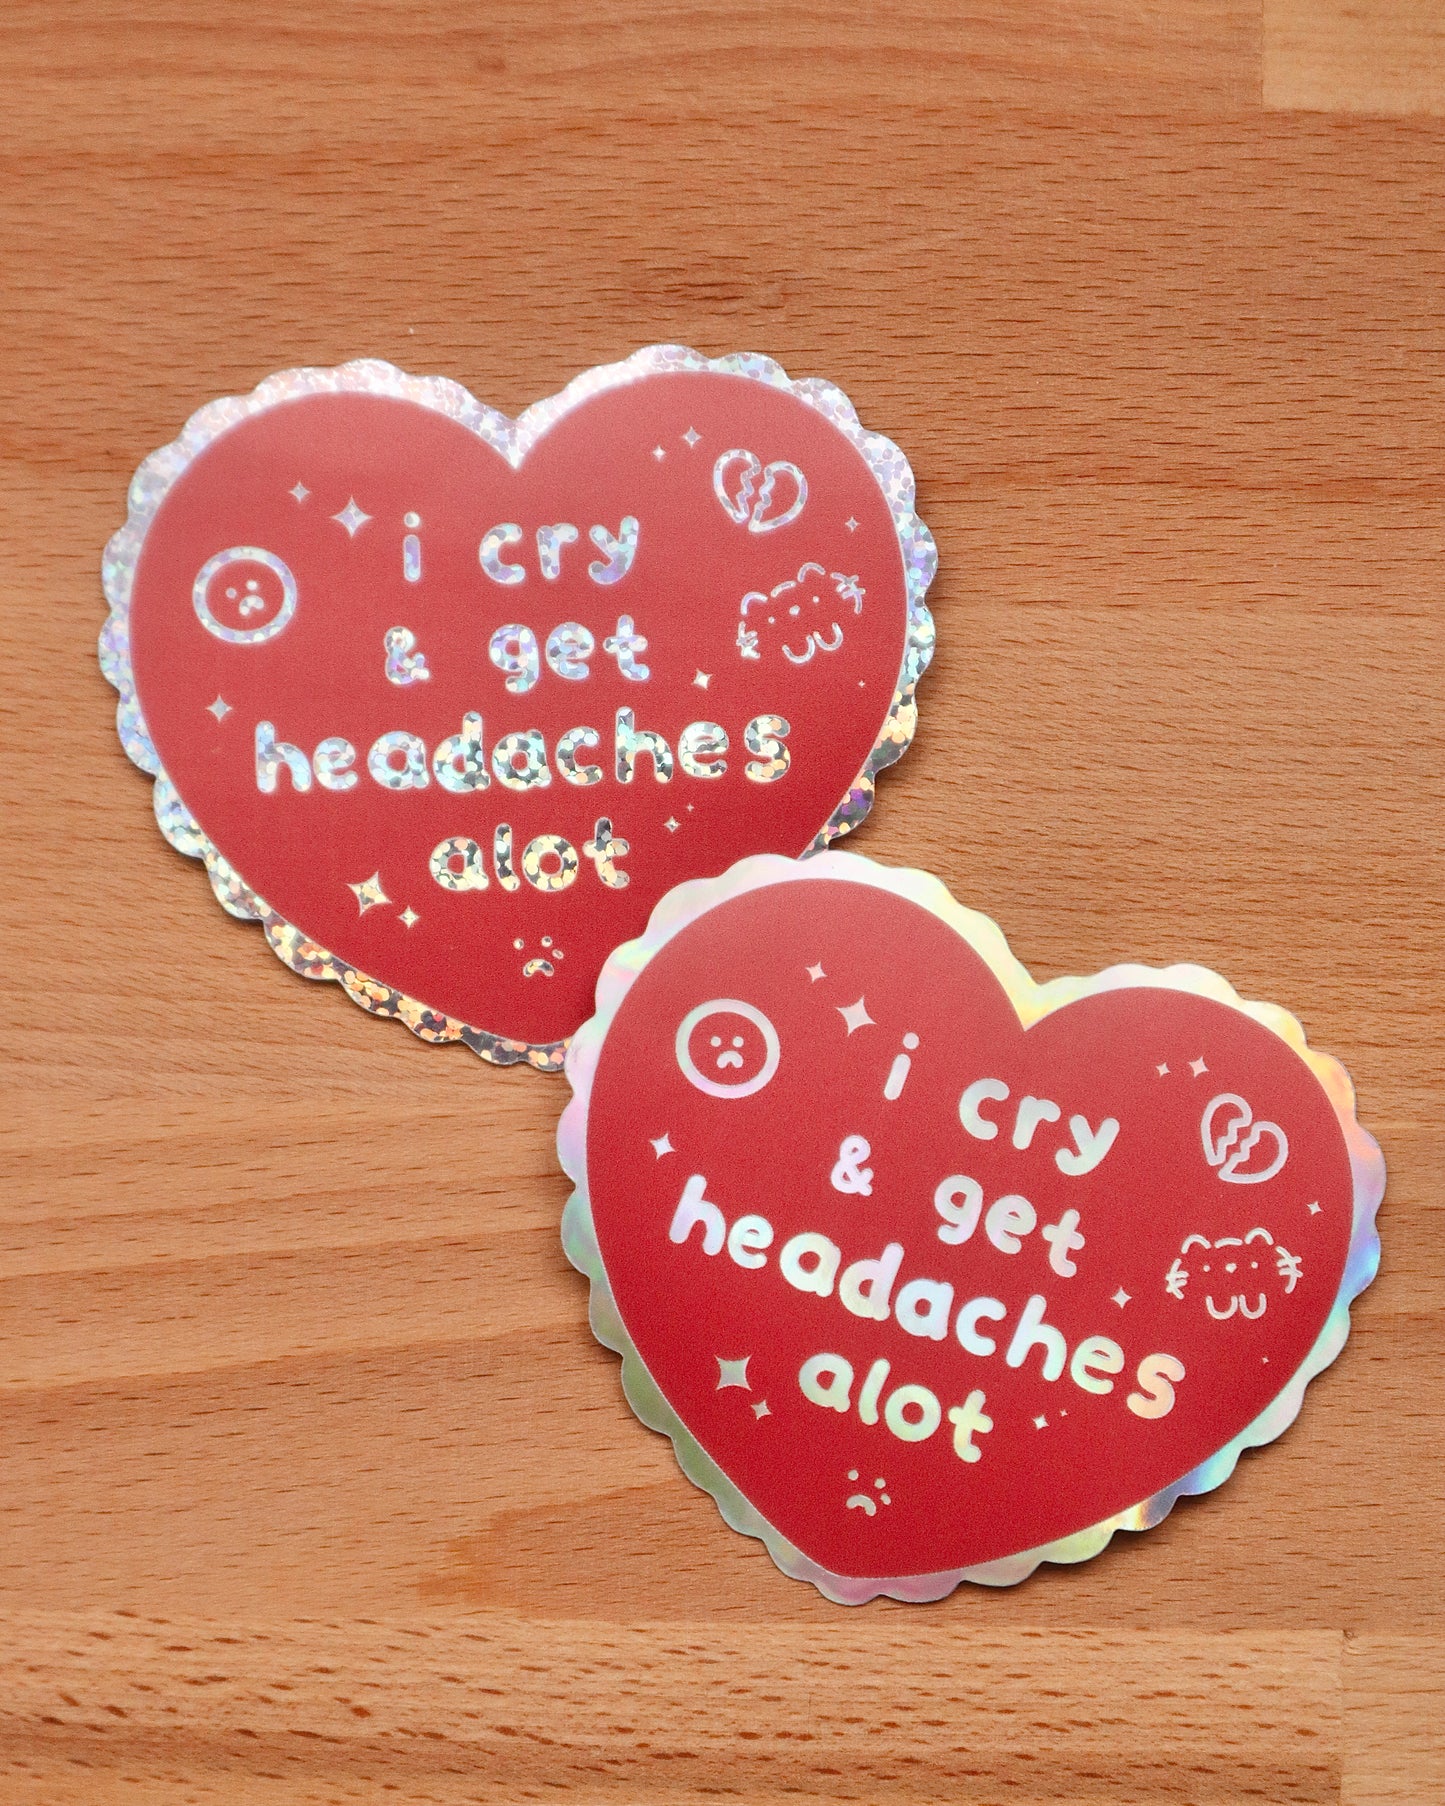 I Cry & Get Headaches Alot Holographic Die-cut Sticker